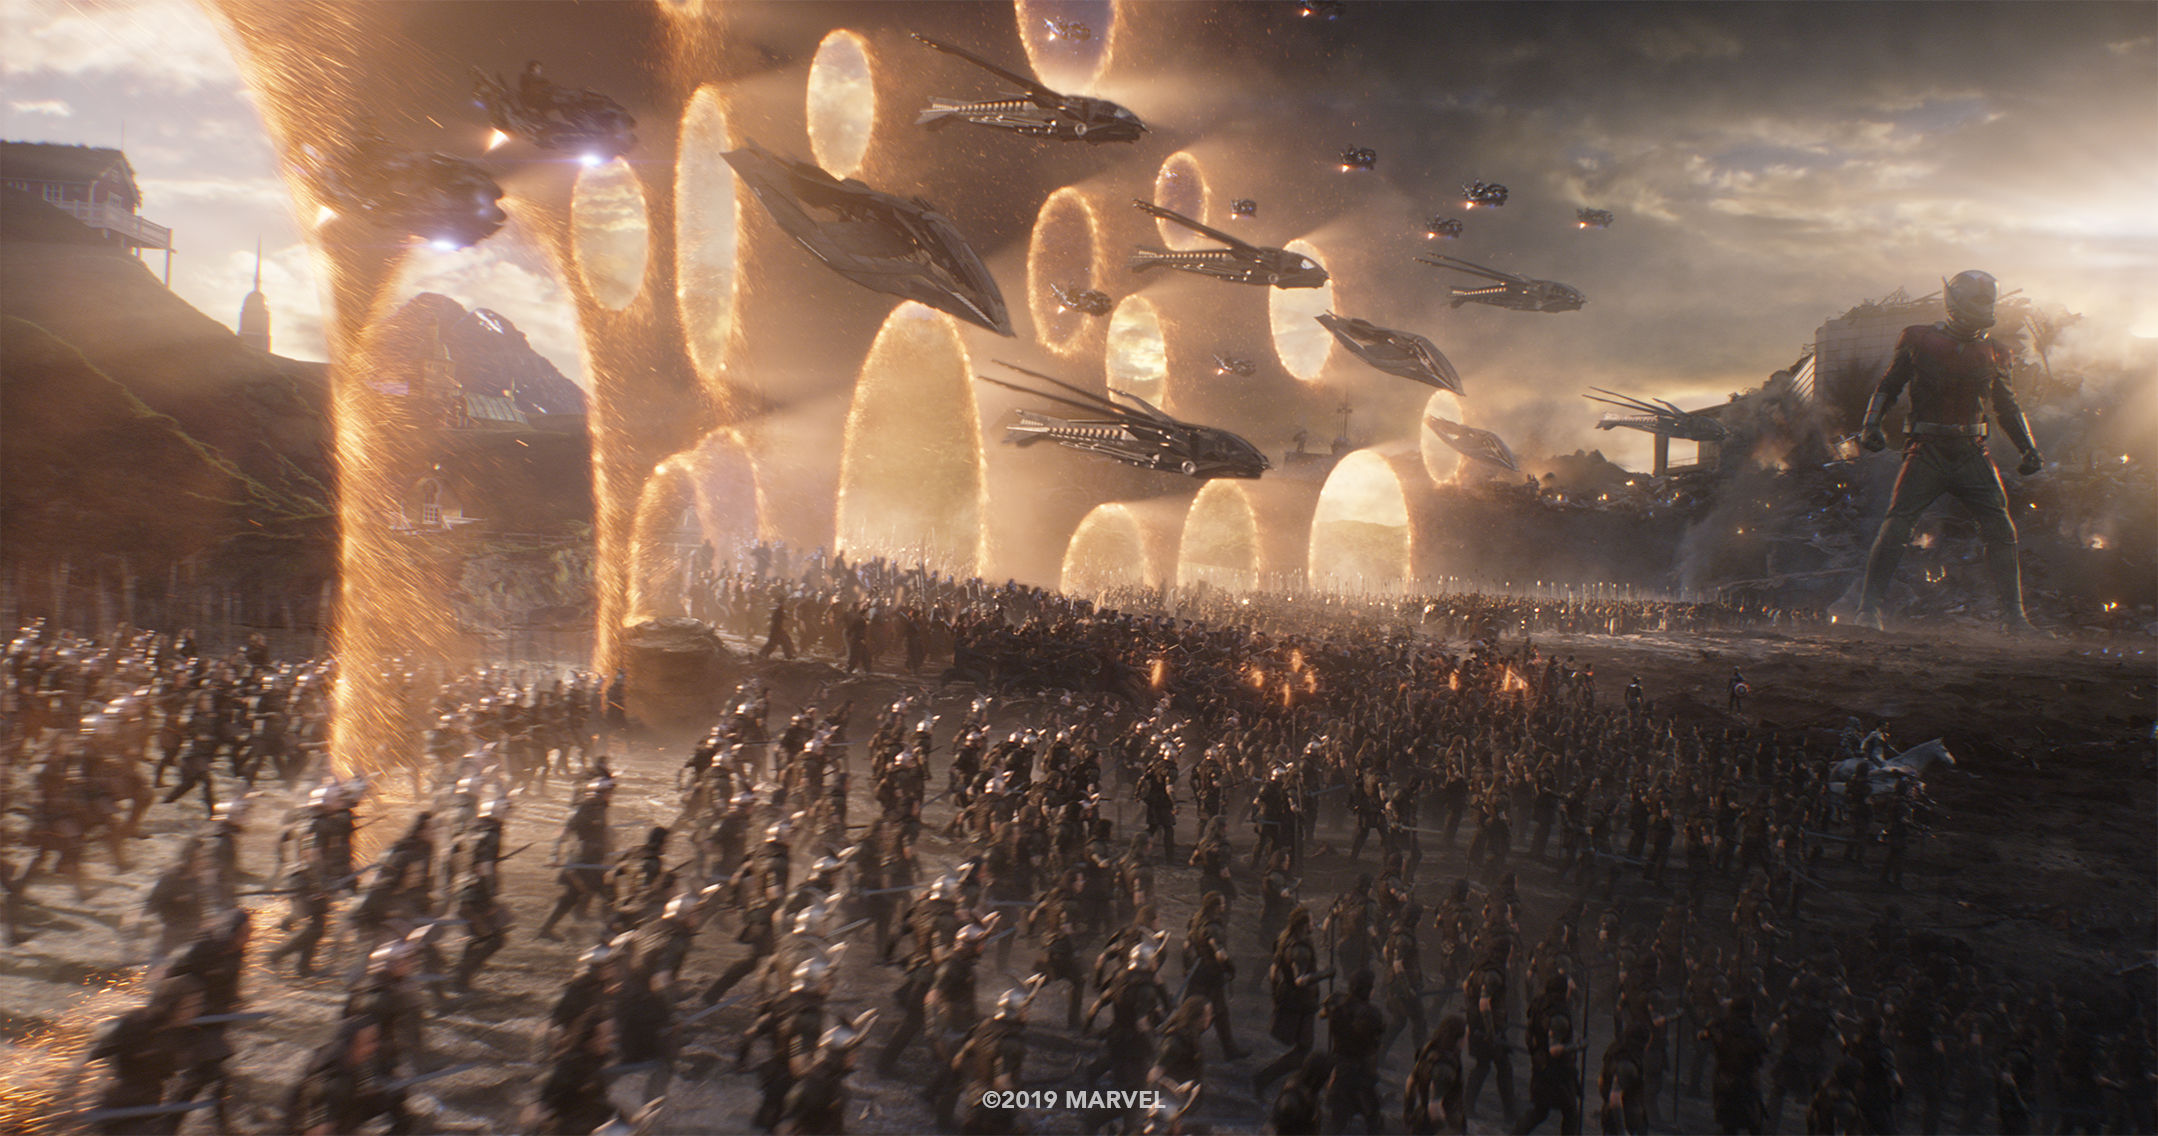 Avengers Endgame portals